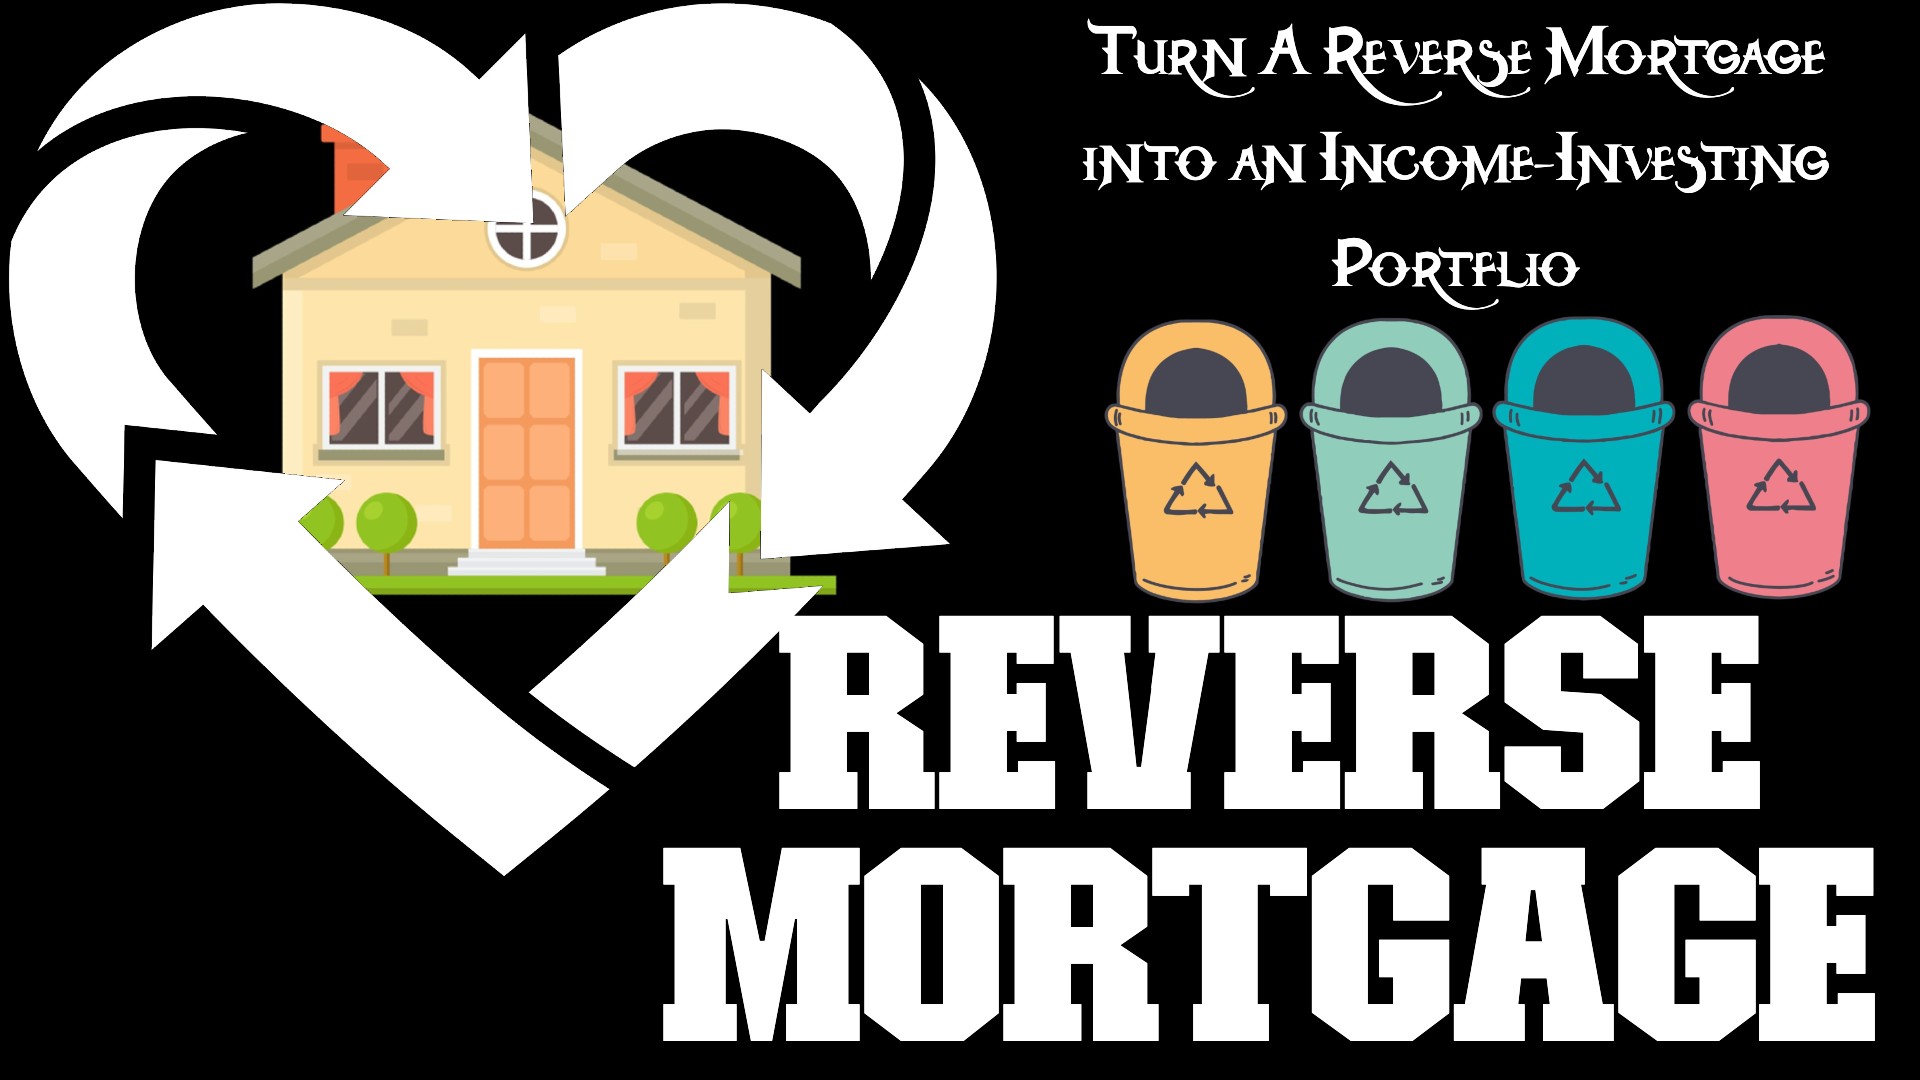 Turn a Reverse Mortgage into Income